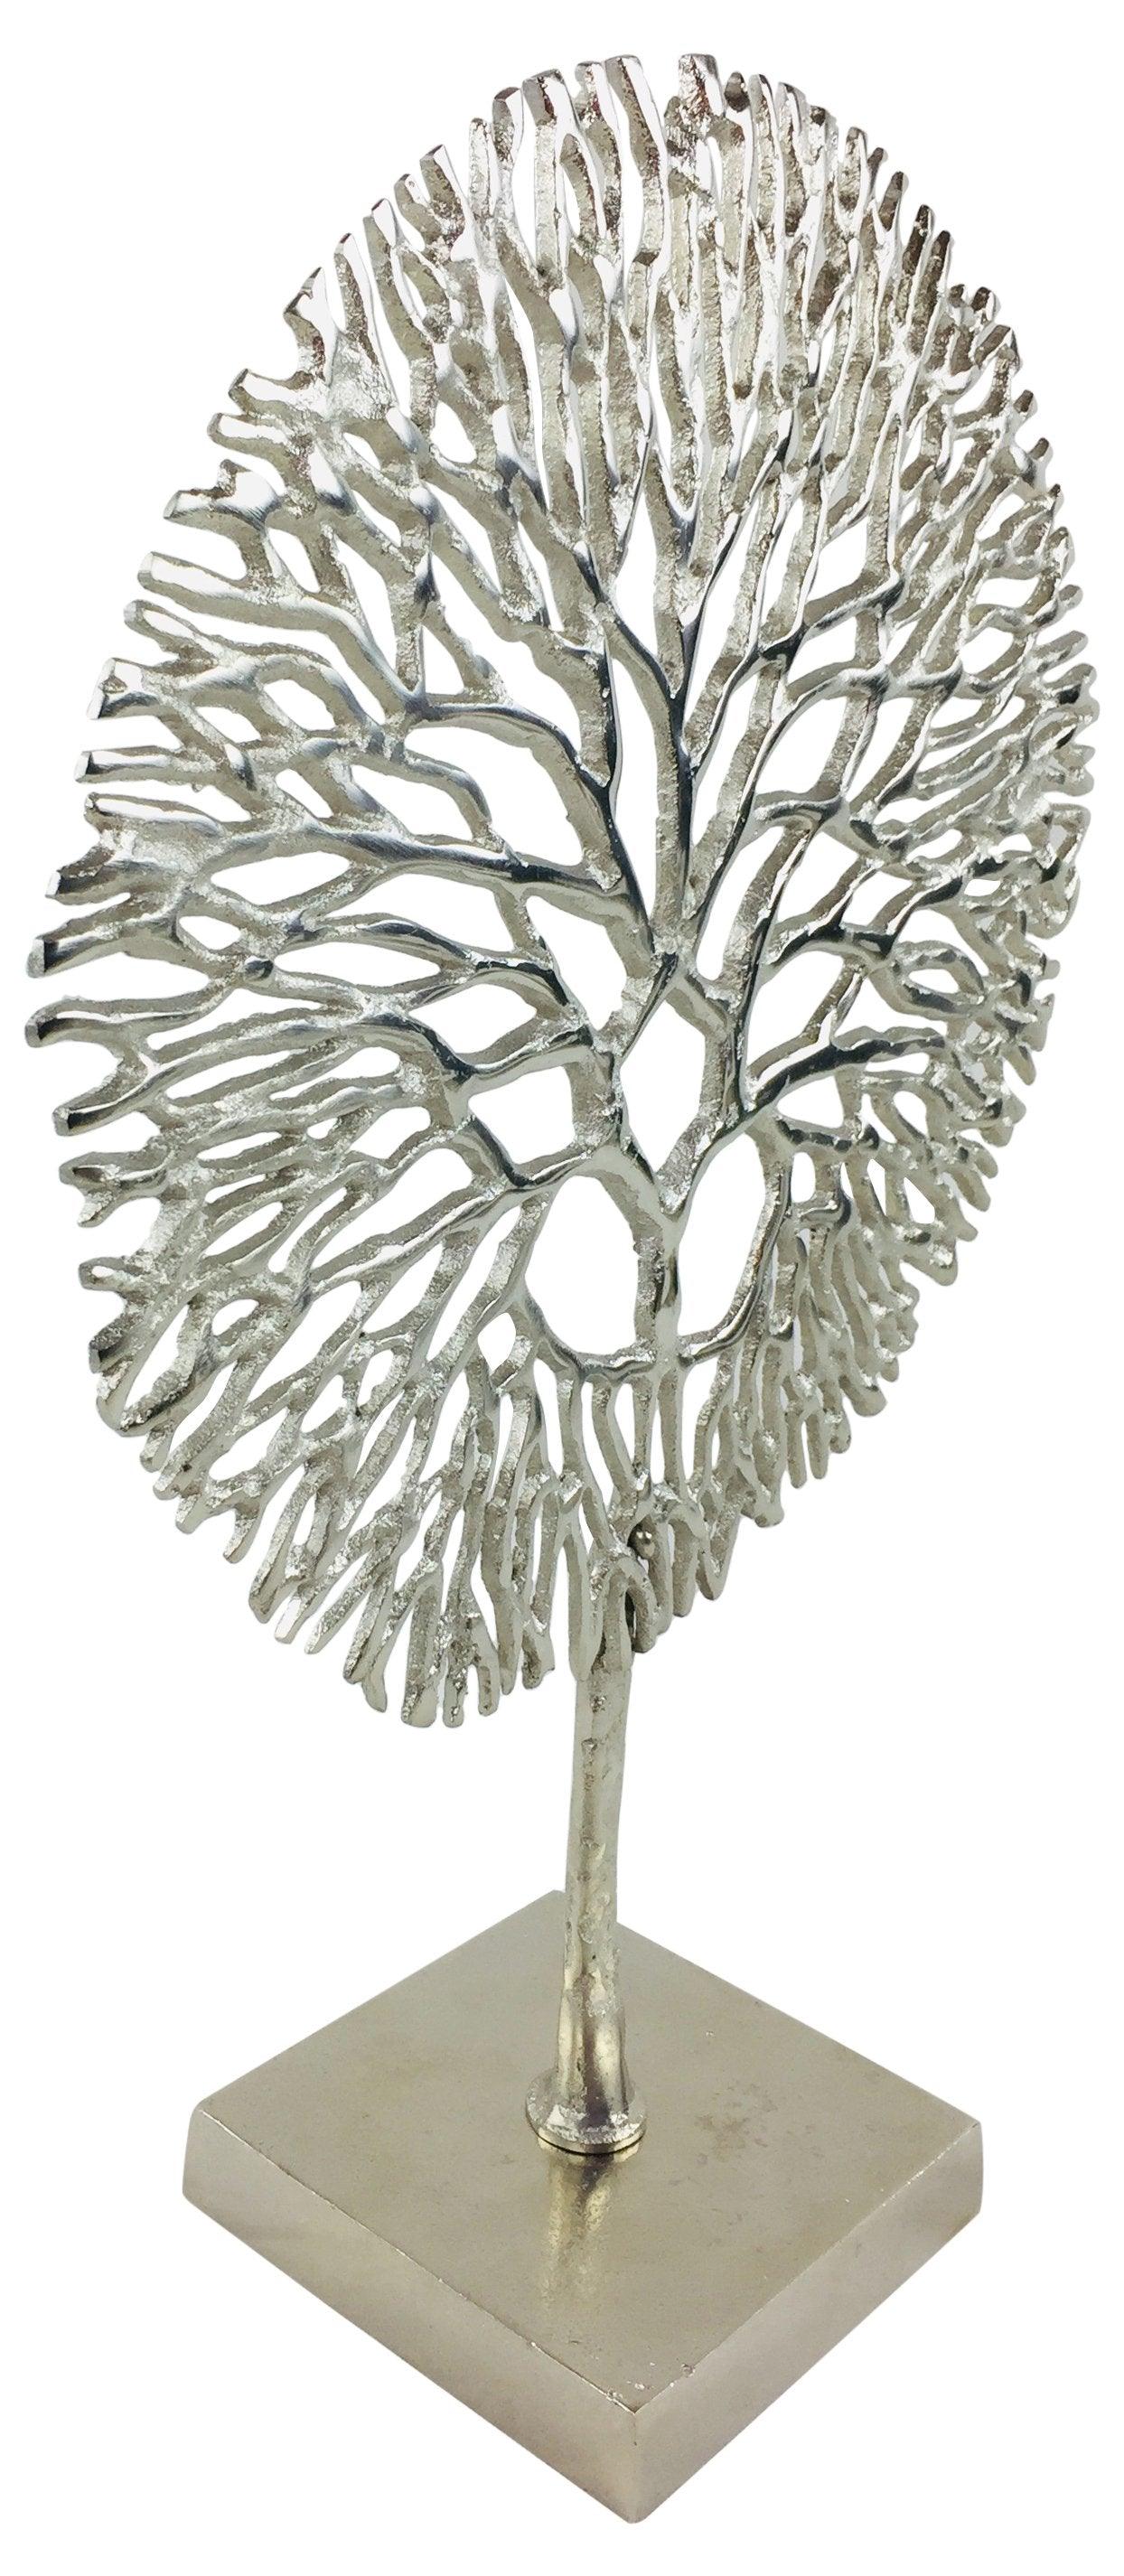 Silver Coral Sculpture - £58.99 - Ornaments 